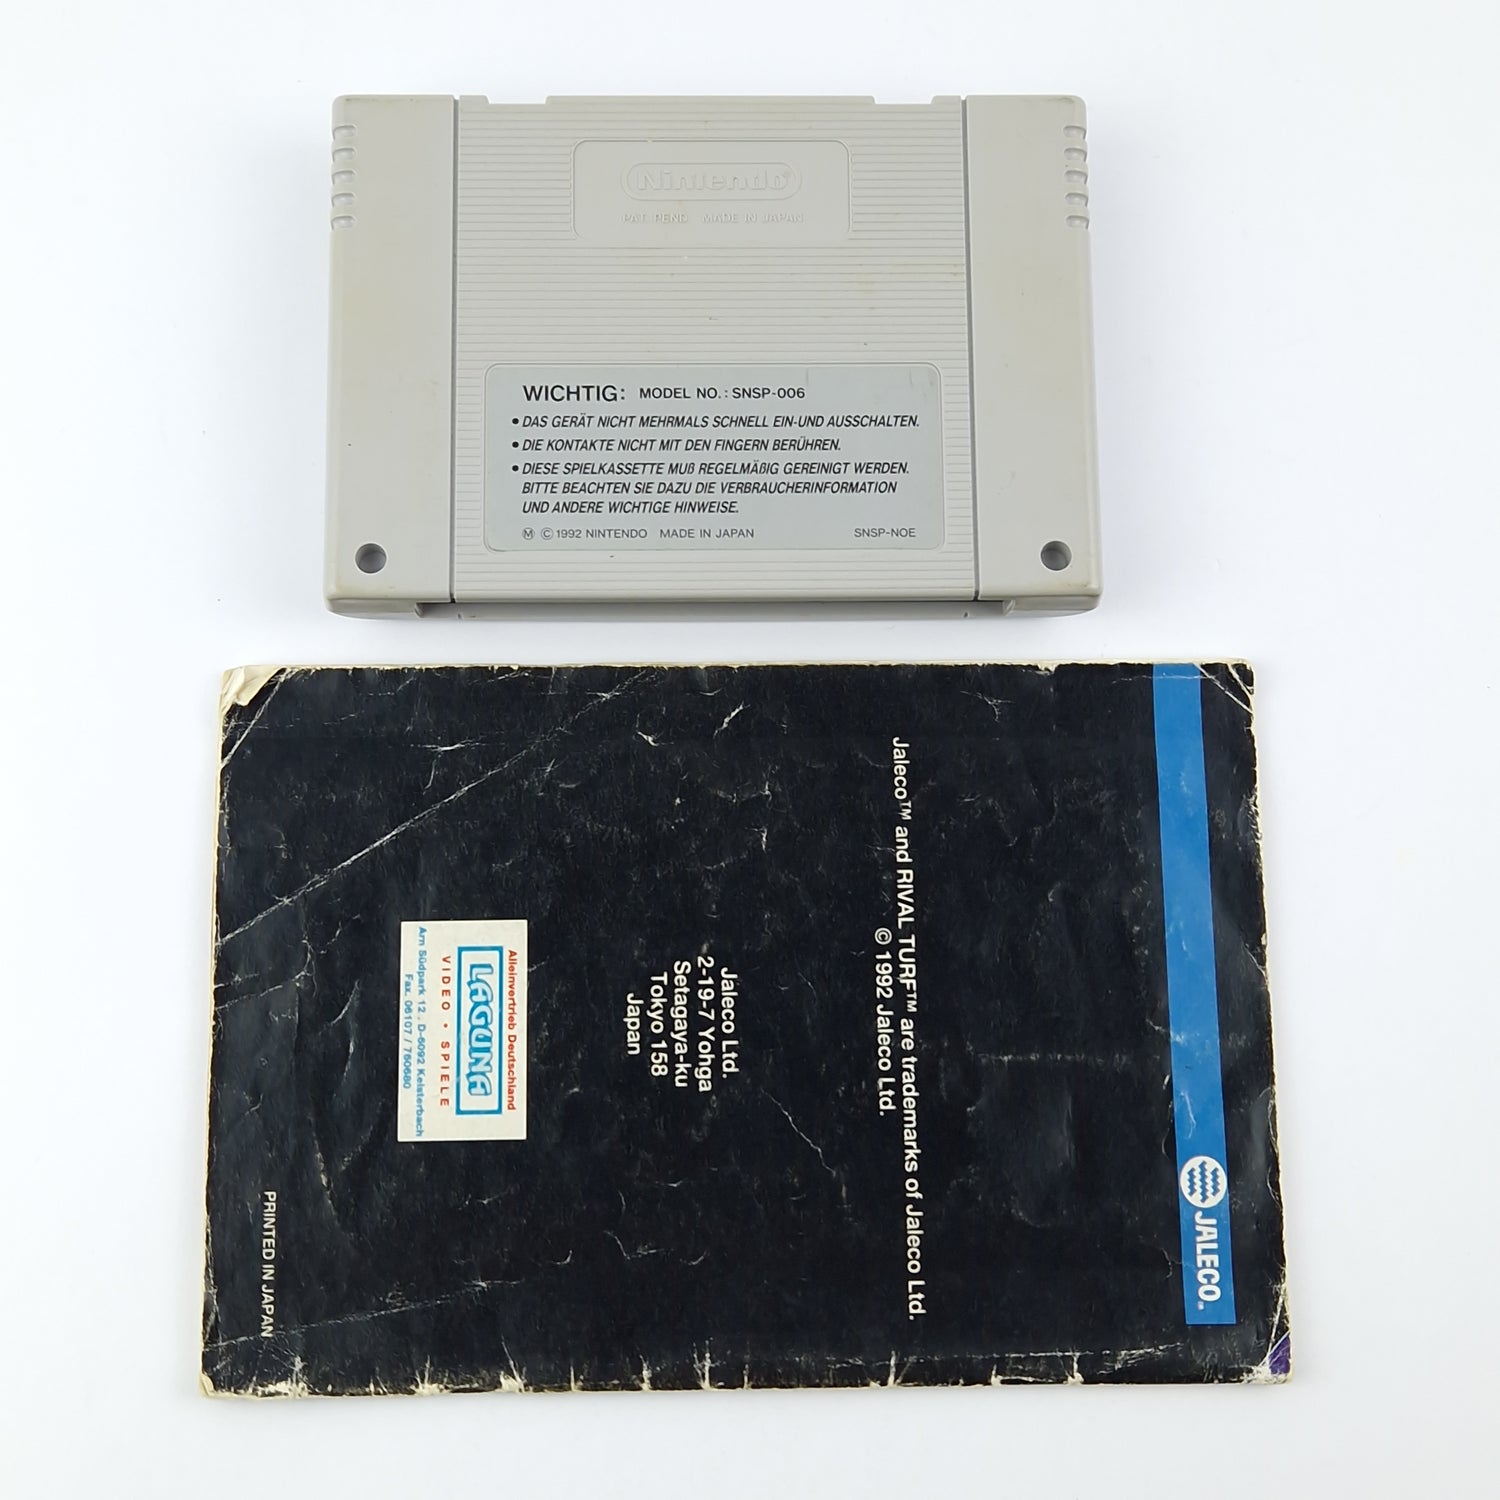 Super Nintendo Game: Rival Turf + Instructions - Module / Cartridge / Manual SNES